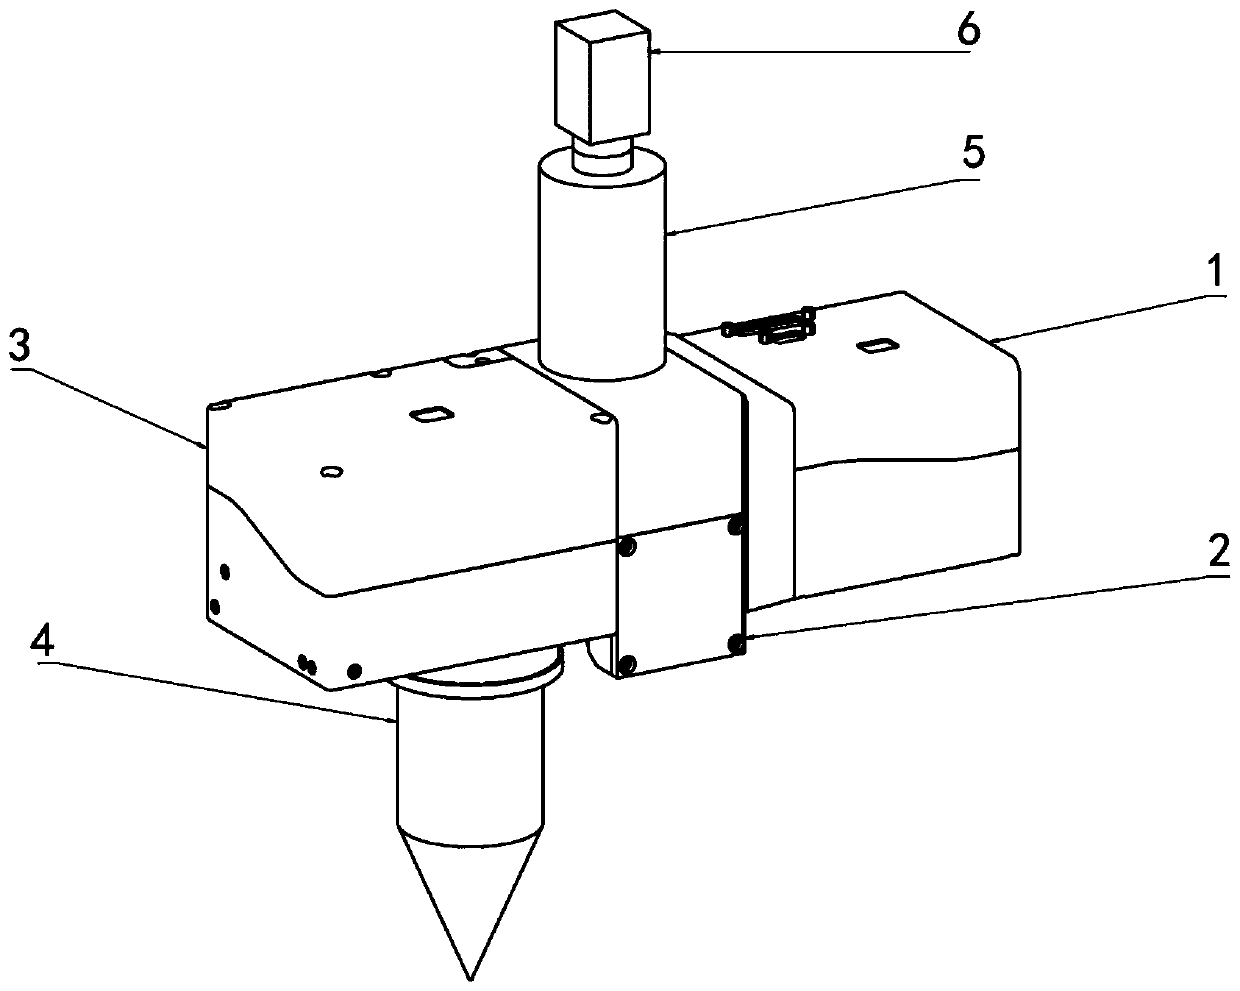 Laser scanning system and laser engraving system with same